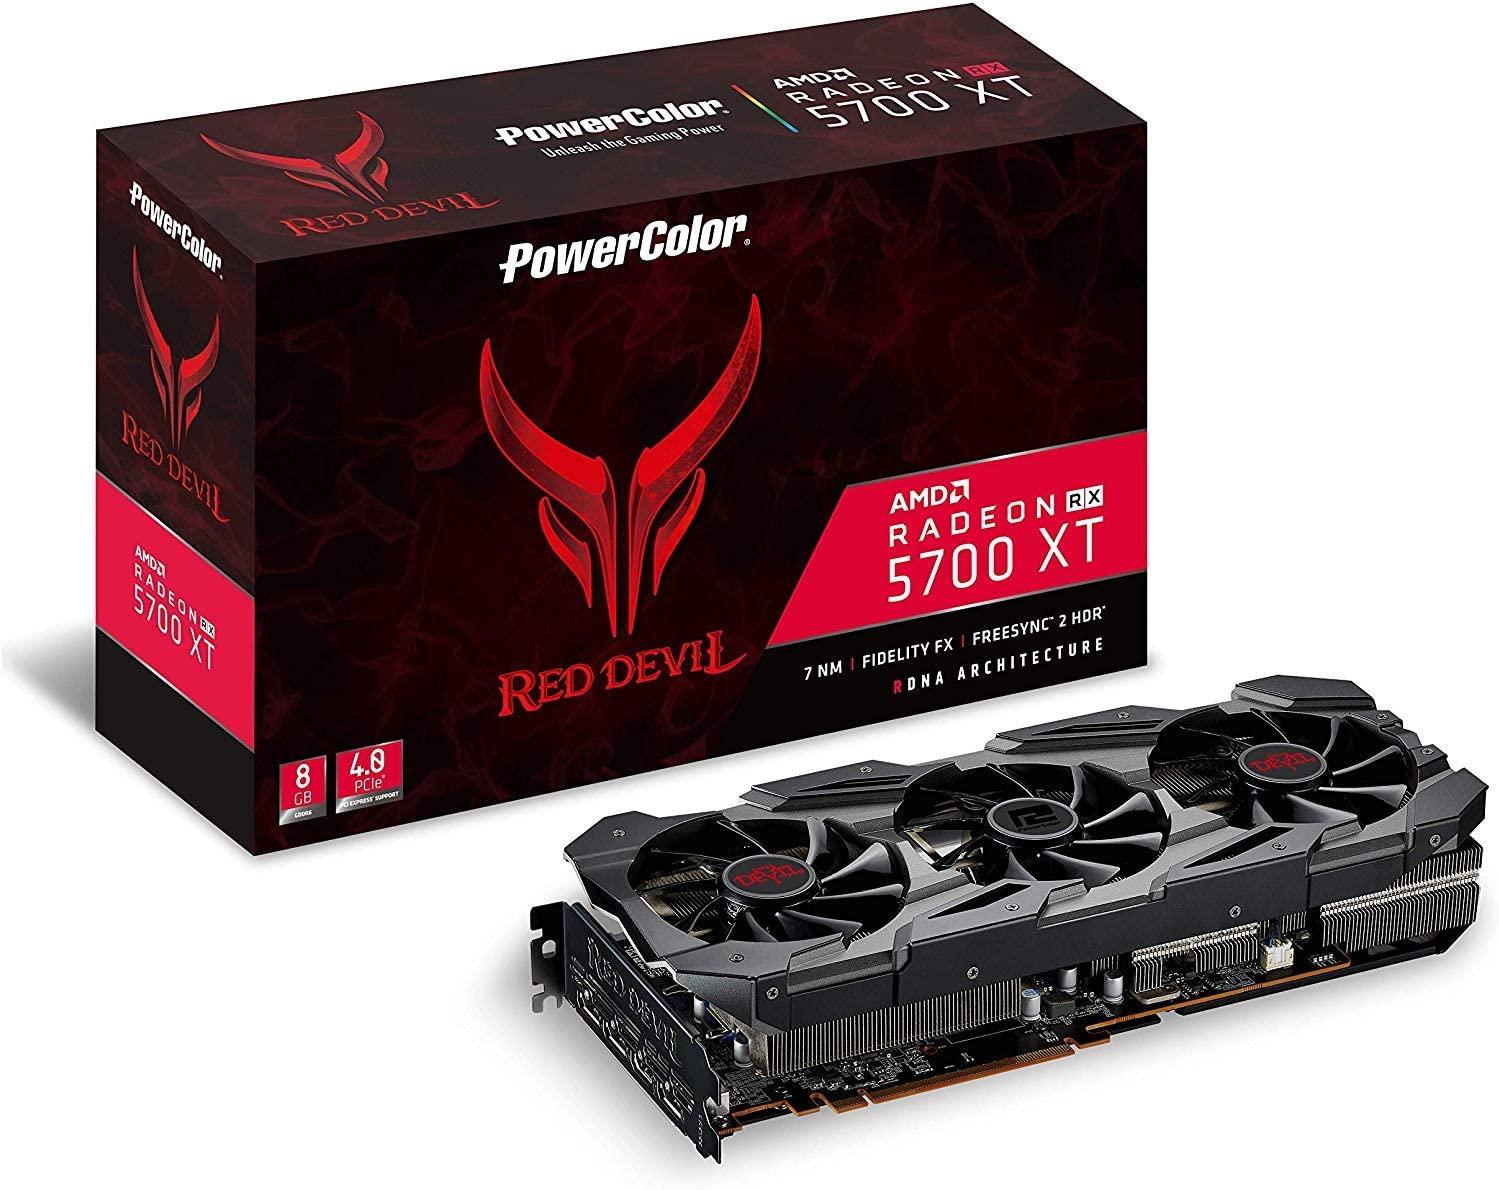 PowerColor Red Devil Radeon RX 5700 8GB GDDR6 AXRX 5700 8GBD6-3DHE OC AMD GPU Graphic Card